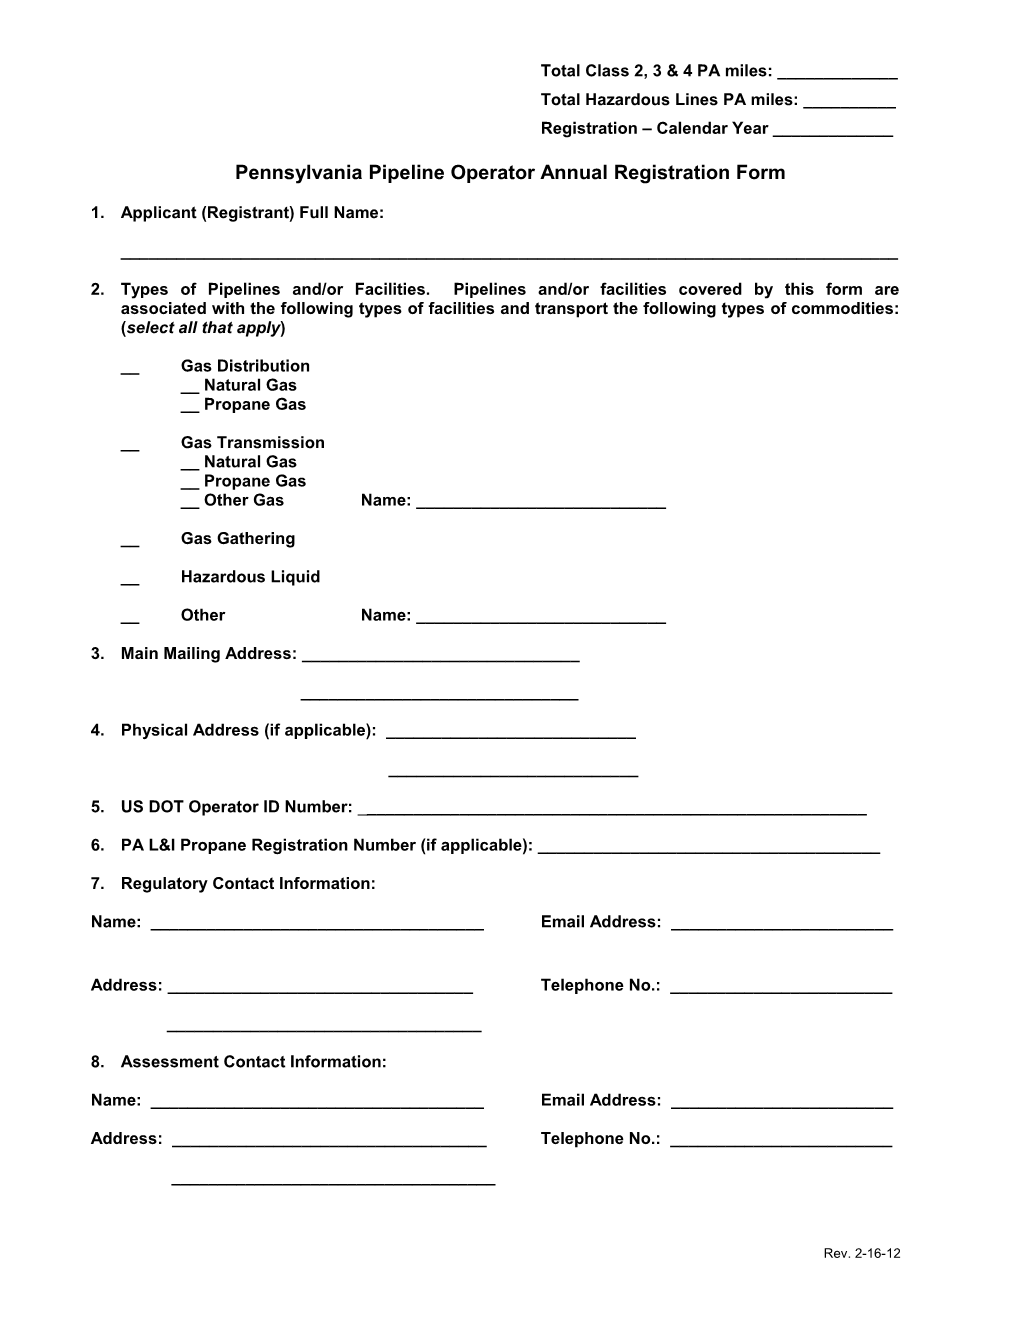 Pennsylvania Pipeline Operatorannual Registration Form